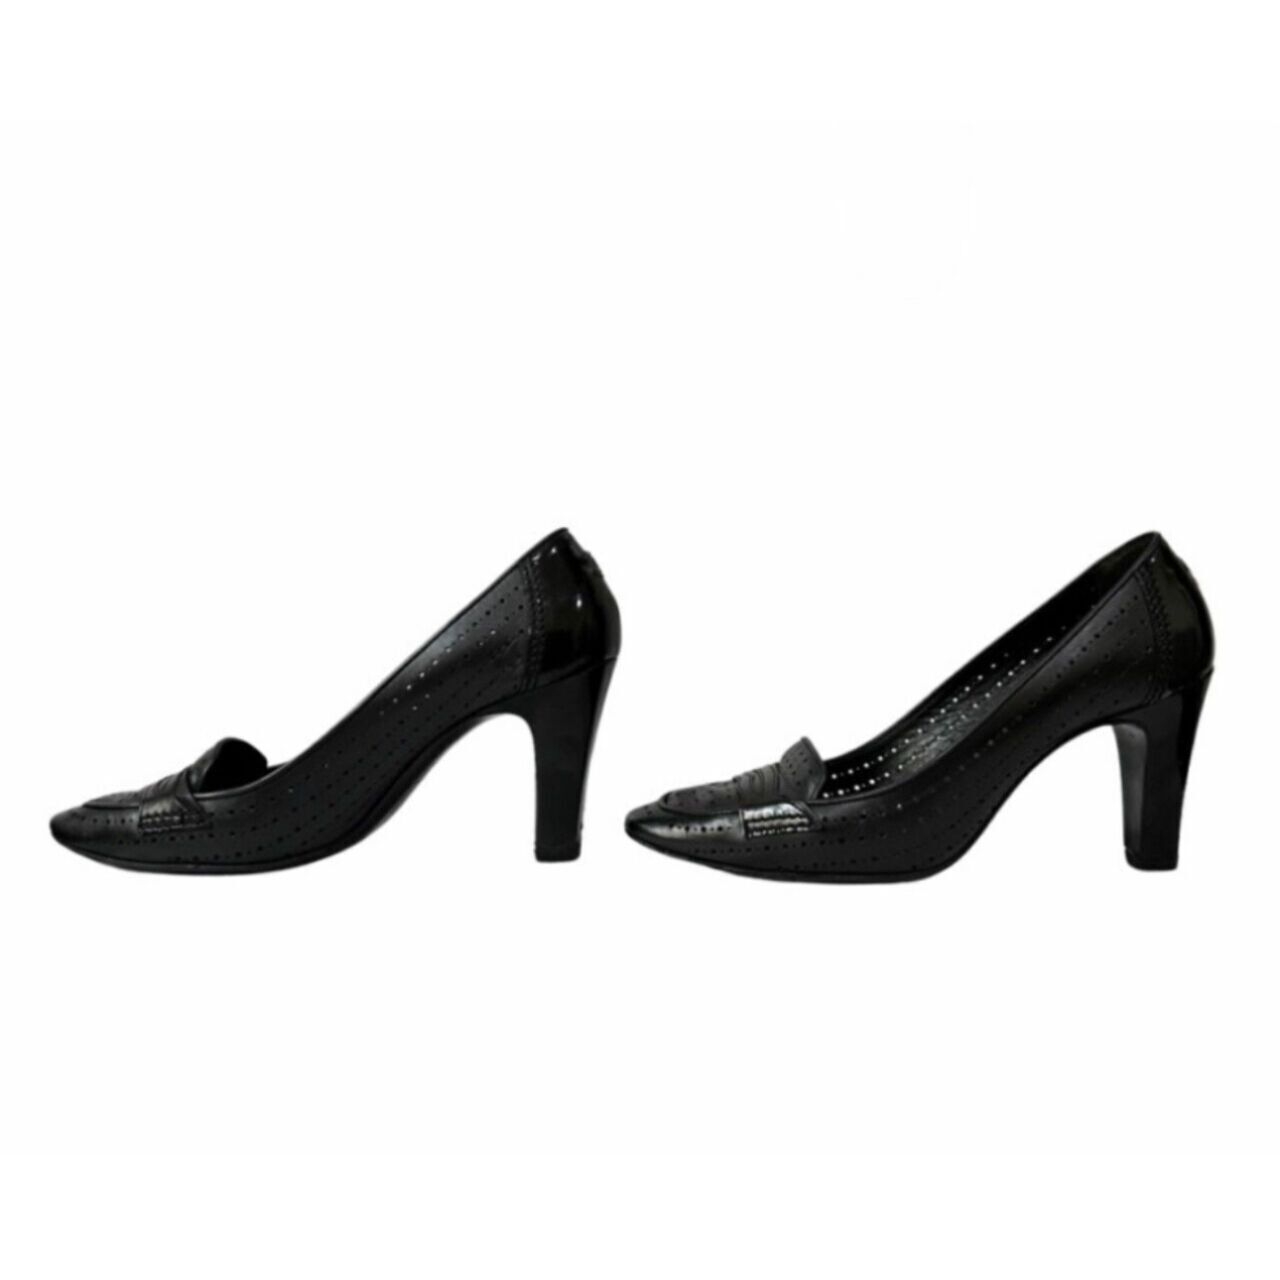 Chanel Black Heels